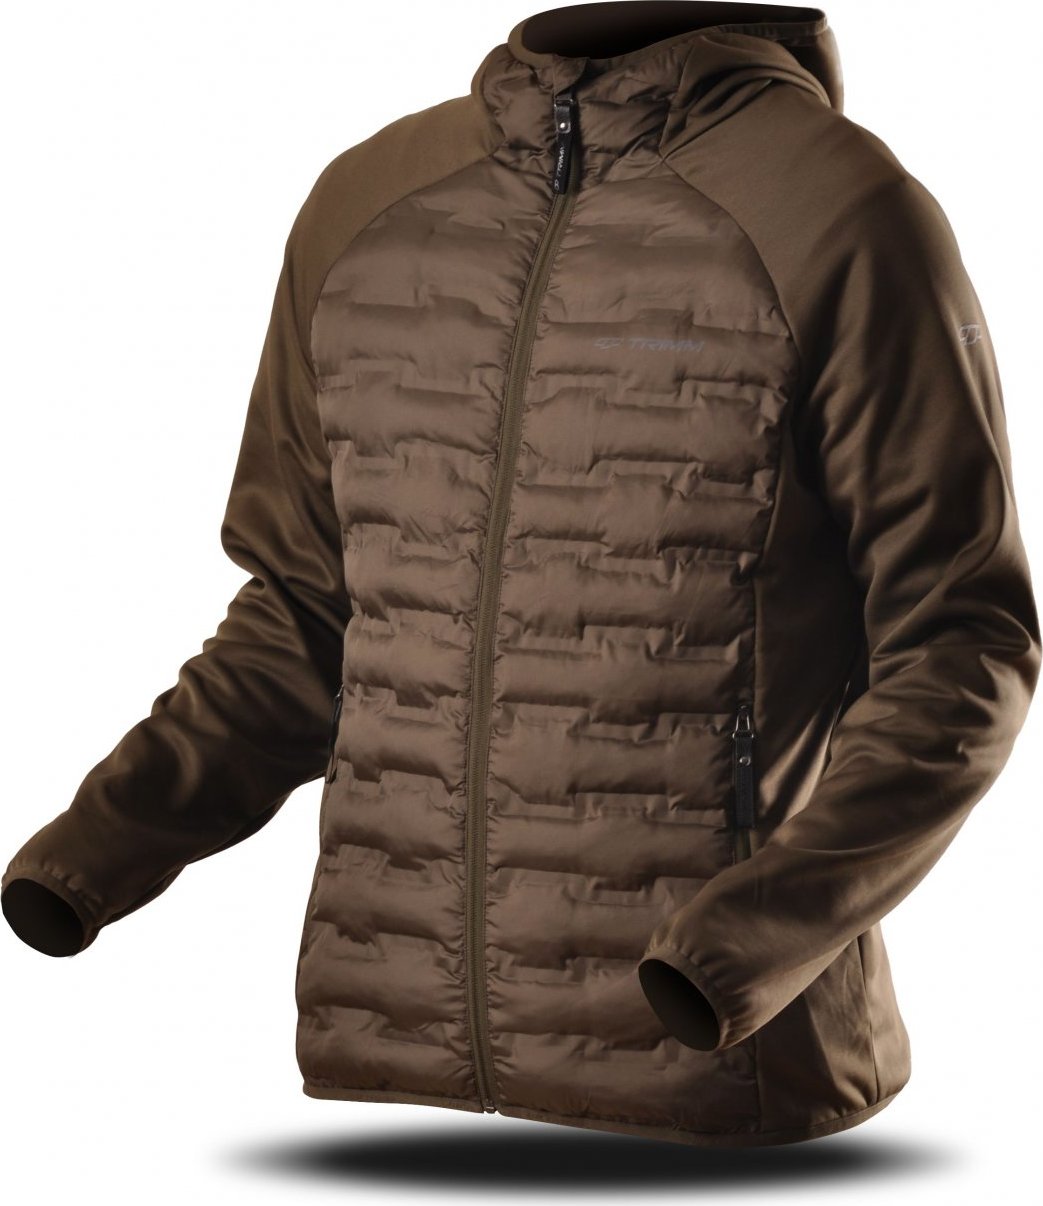 Pánská multifunkční bunda TRIMM Ervi dark khaki/khaki Velikost: XL, Barva: dark khaki/ khaki